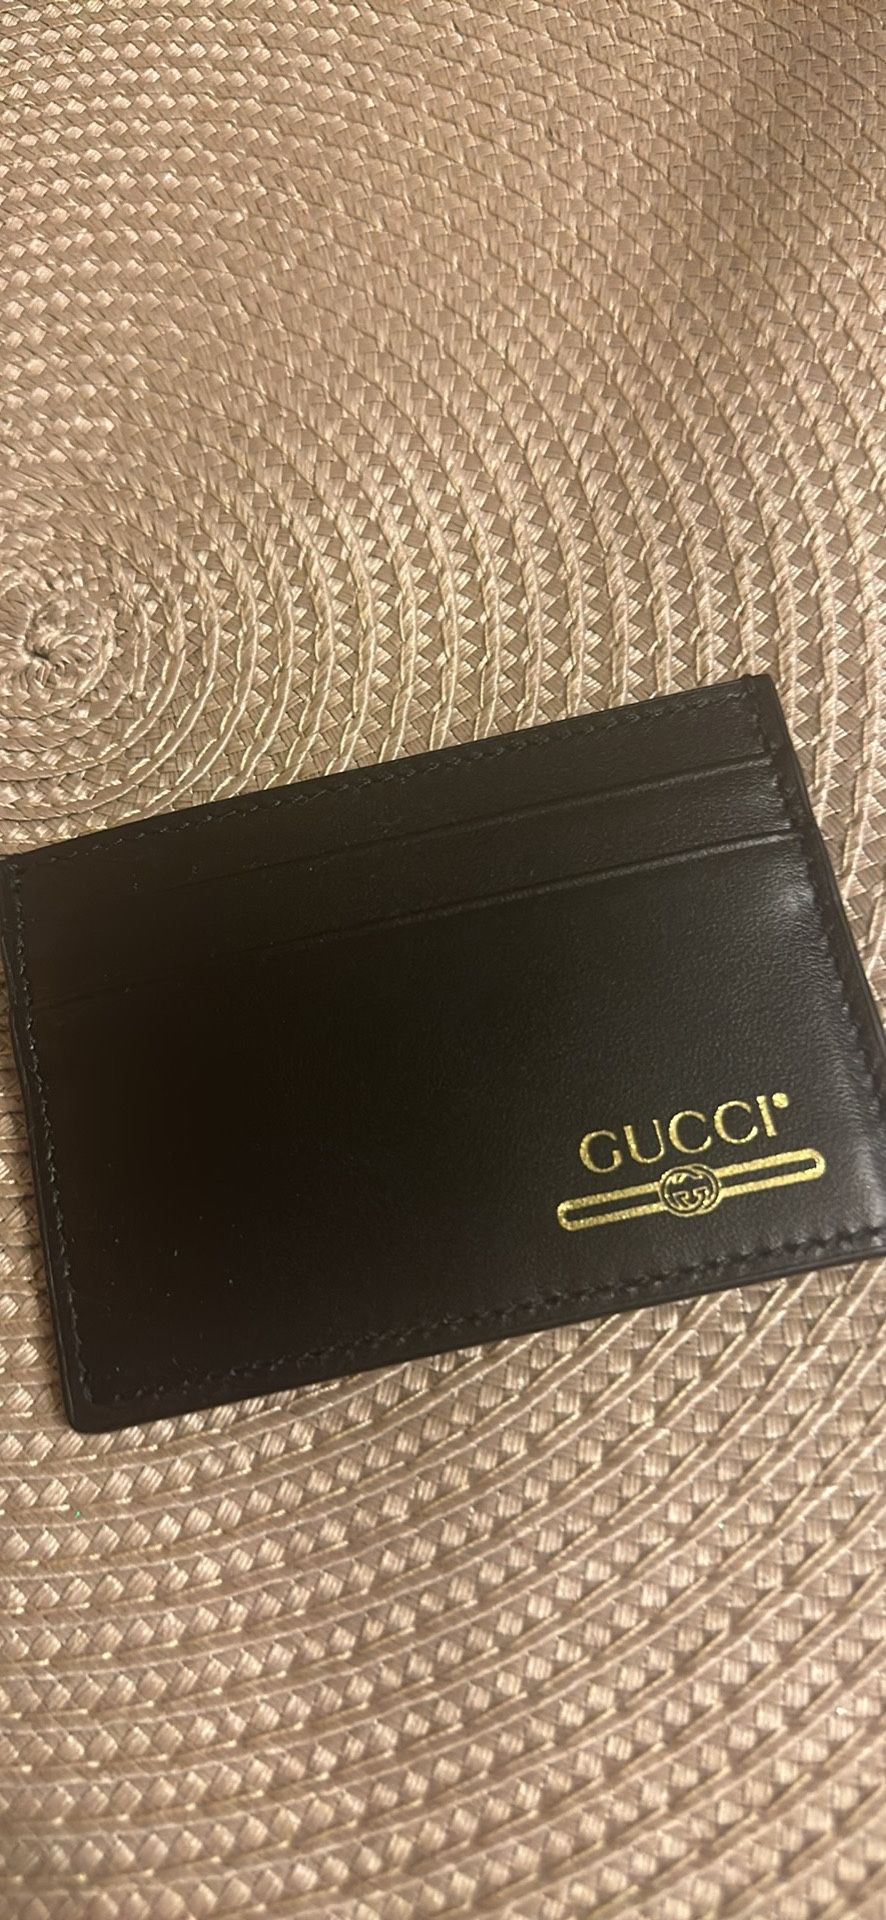 Gucci cardholder 